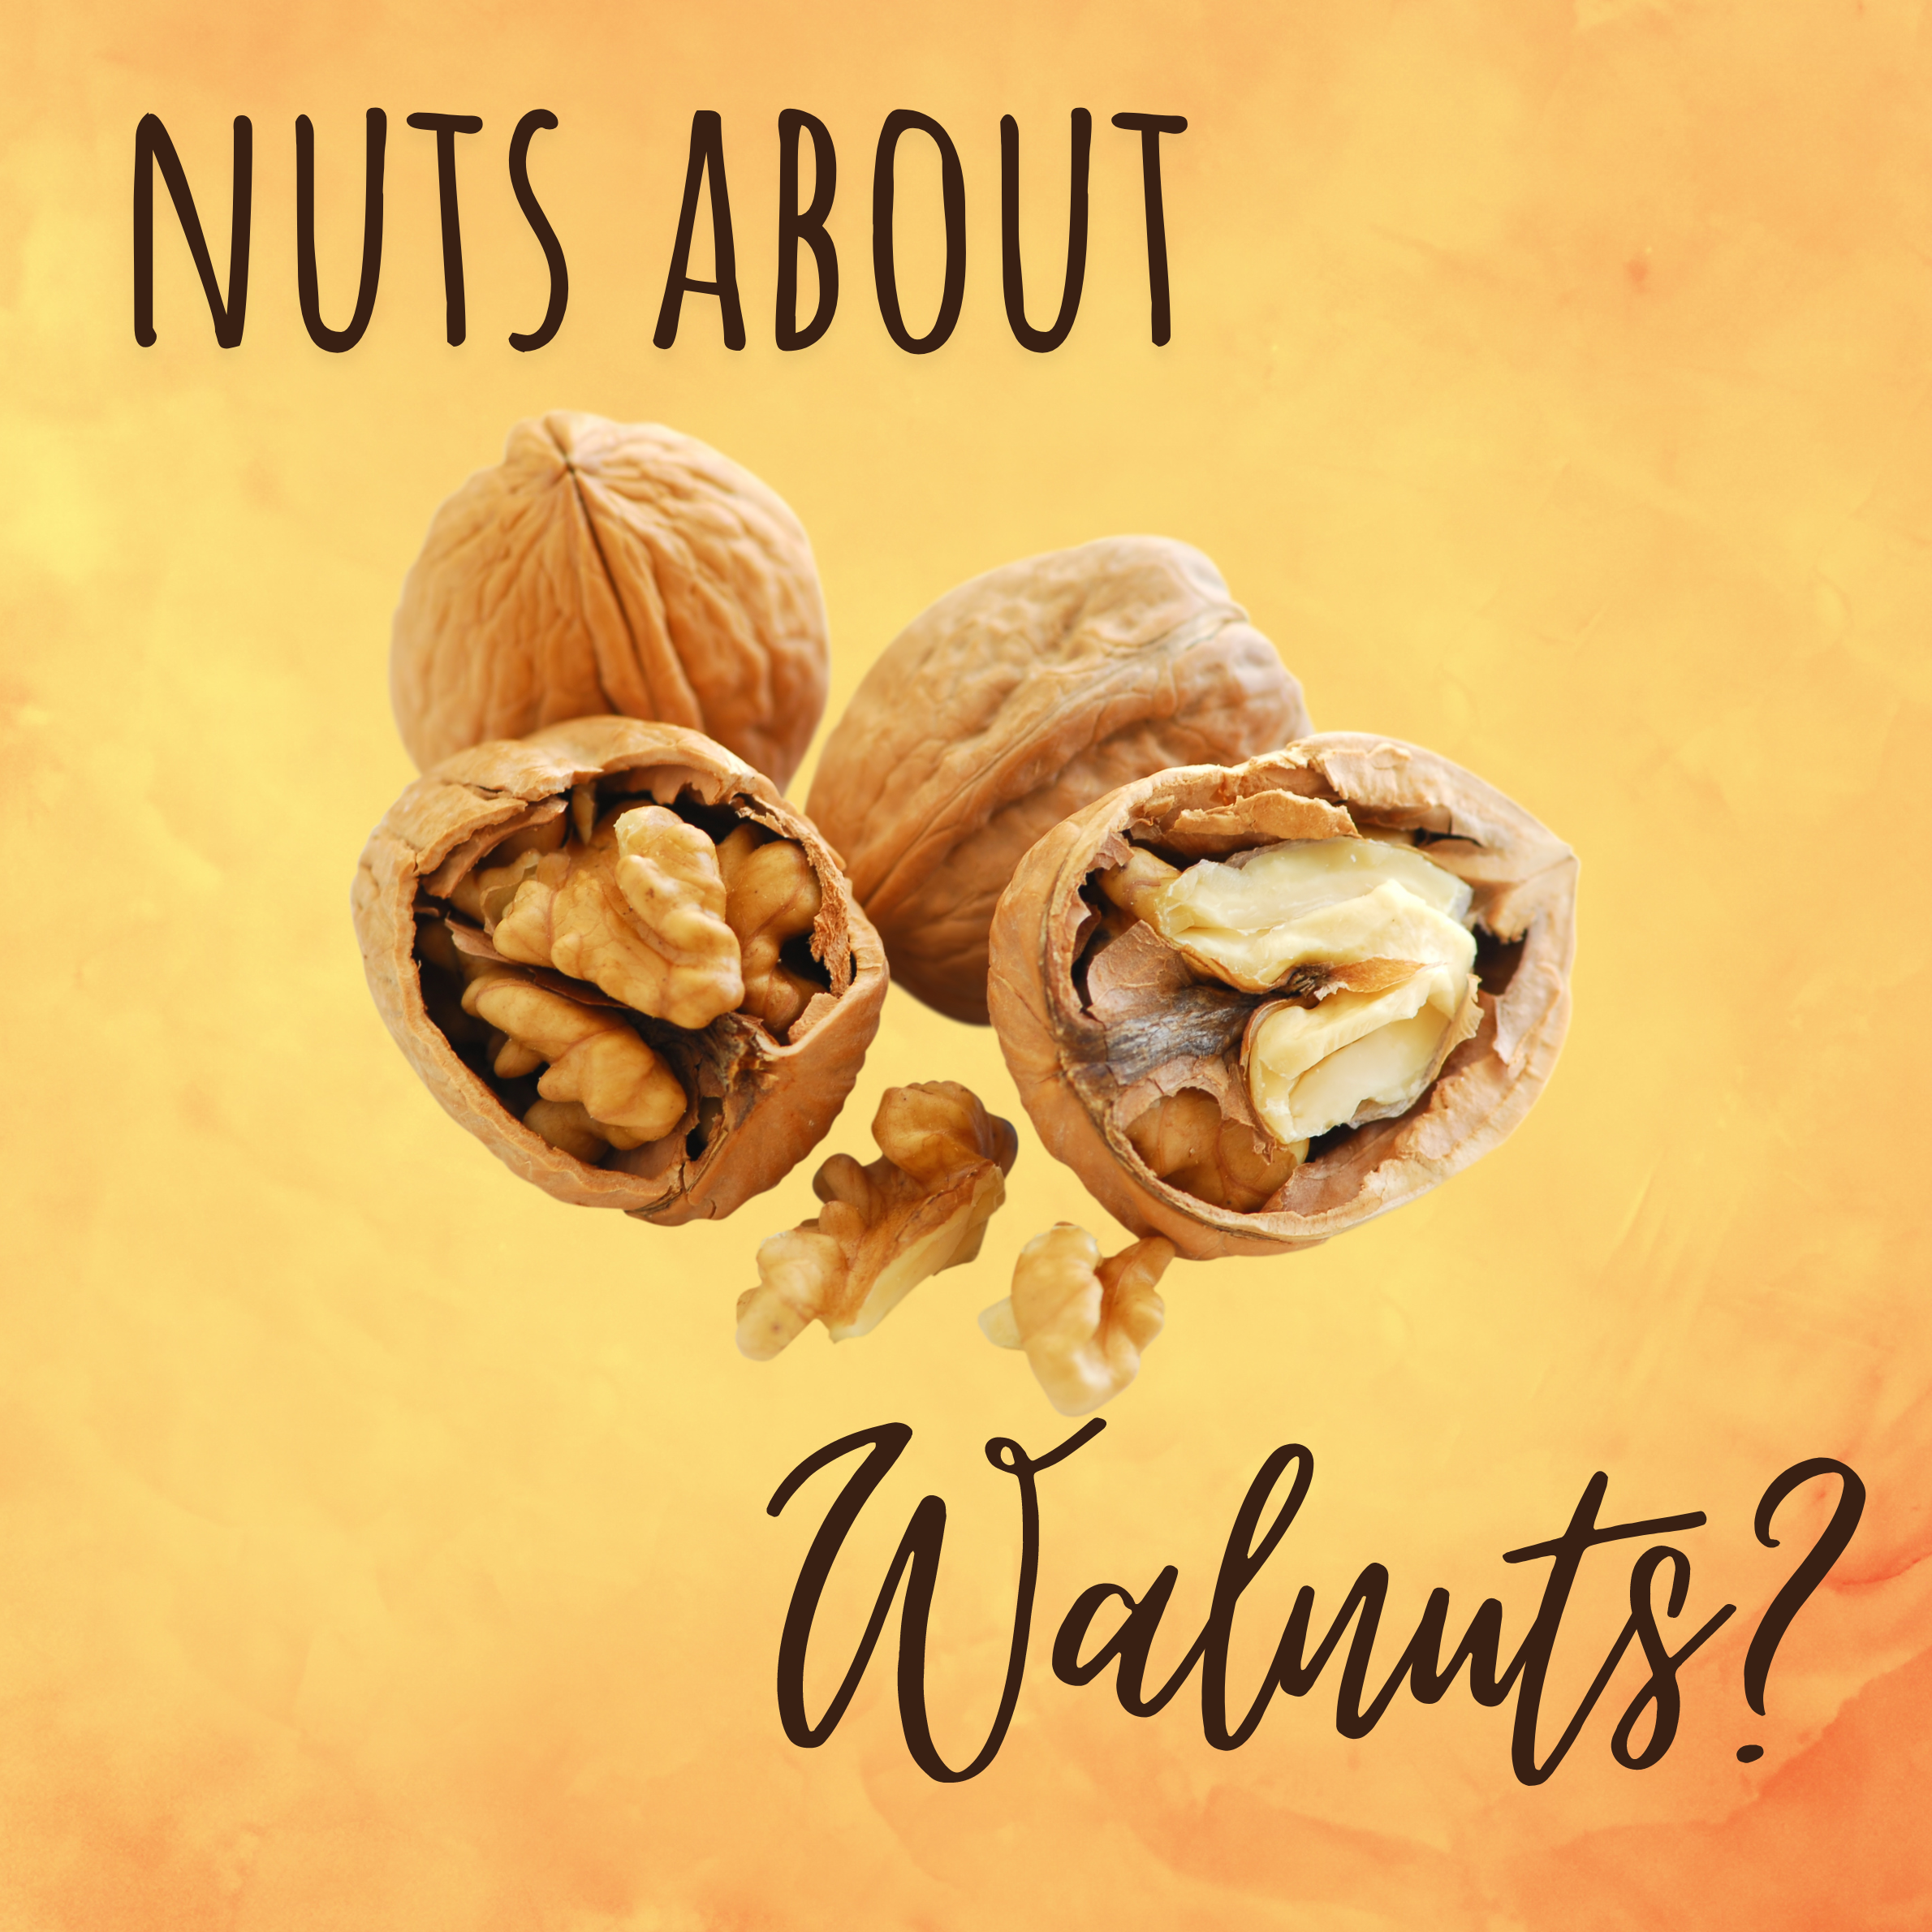 cracked walnuts exposing pulp